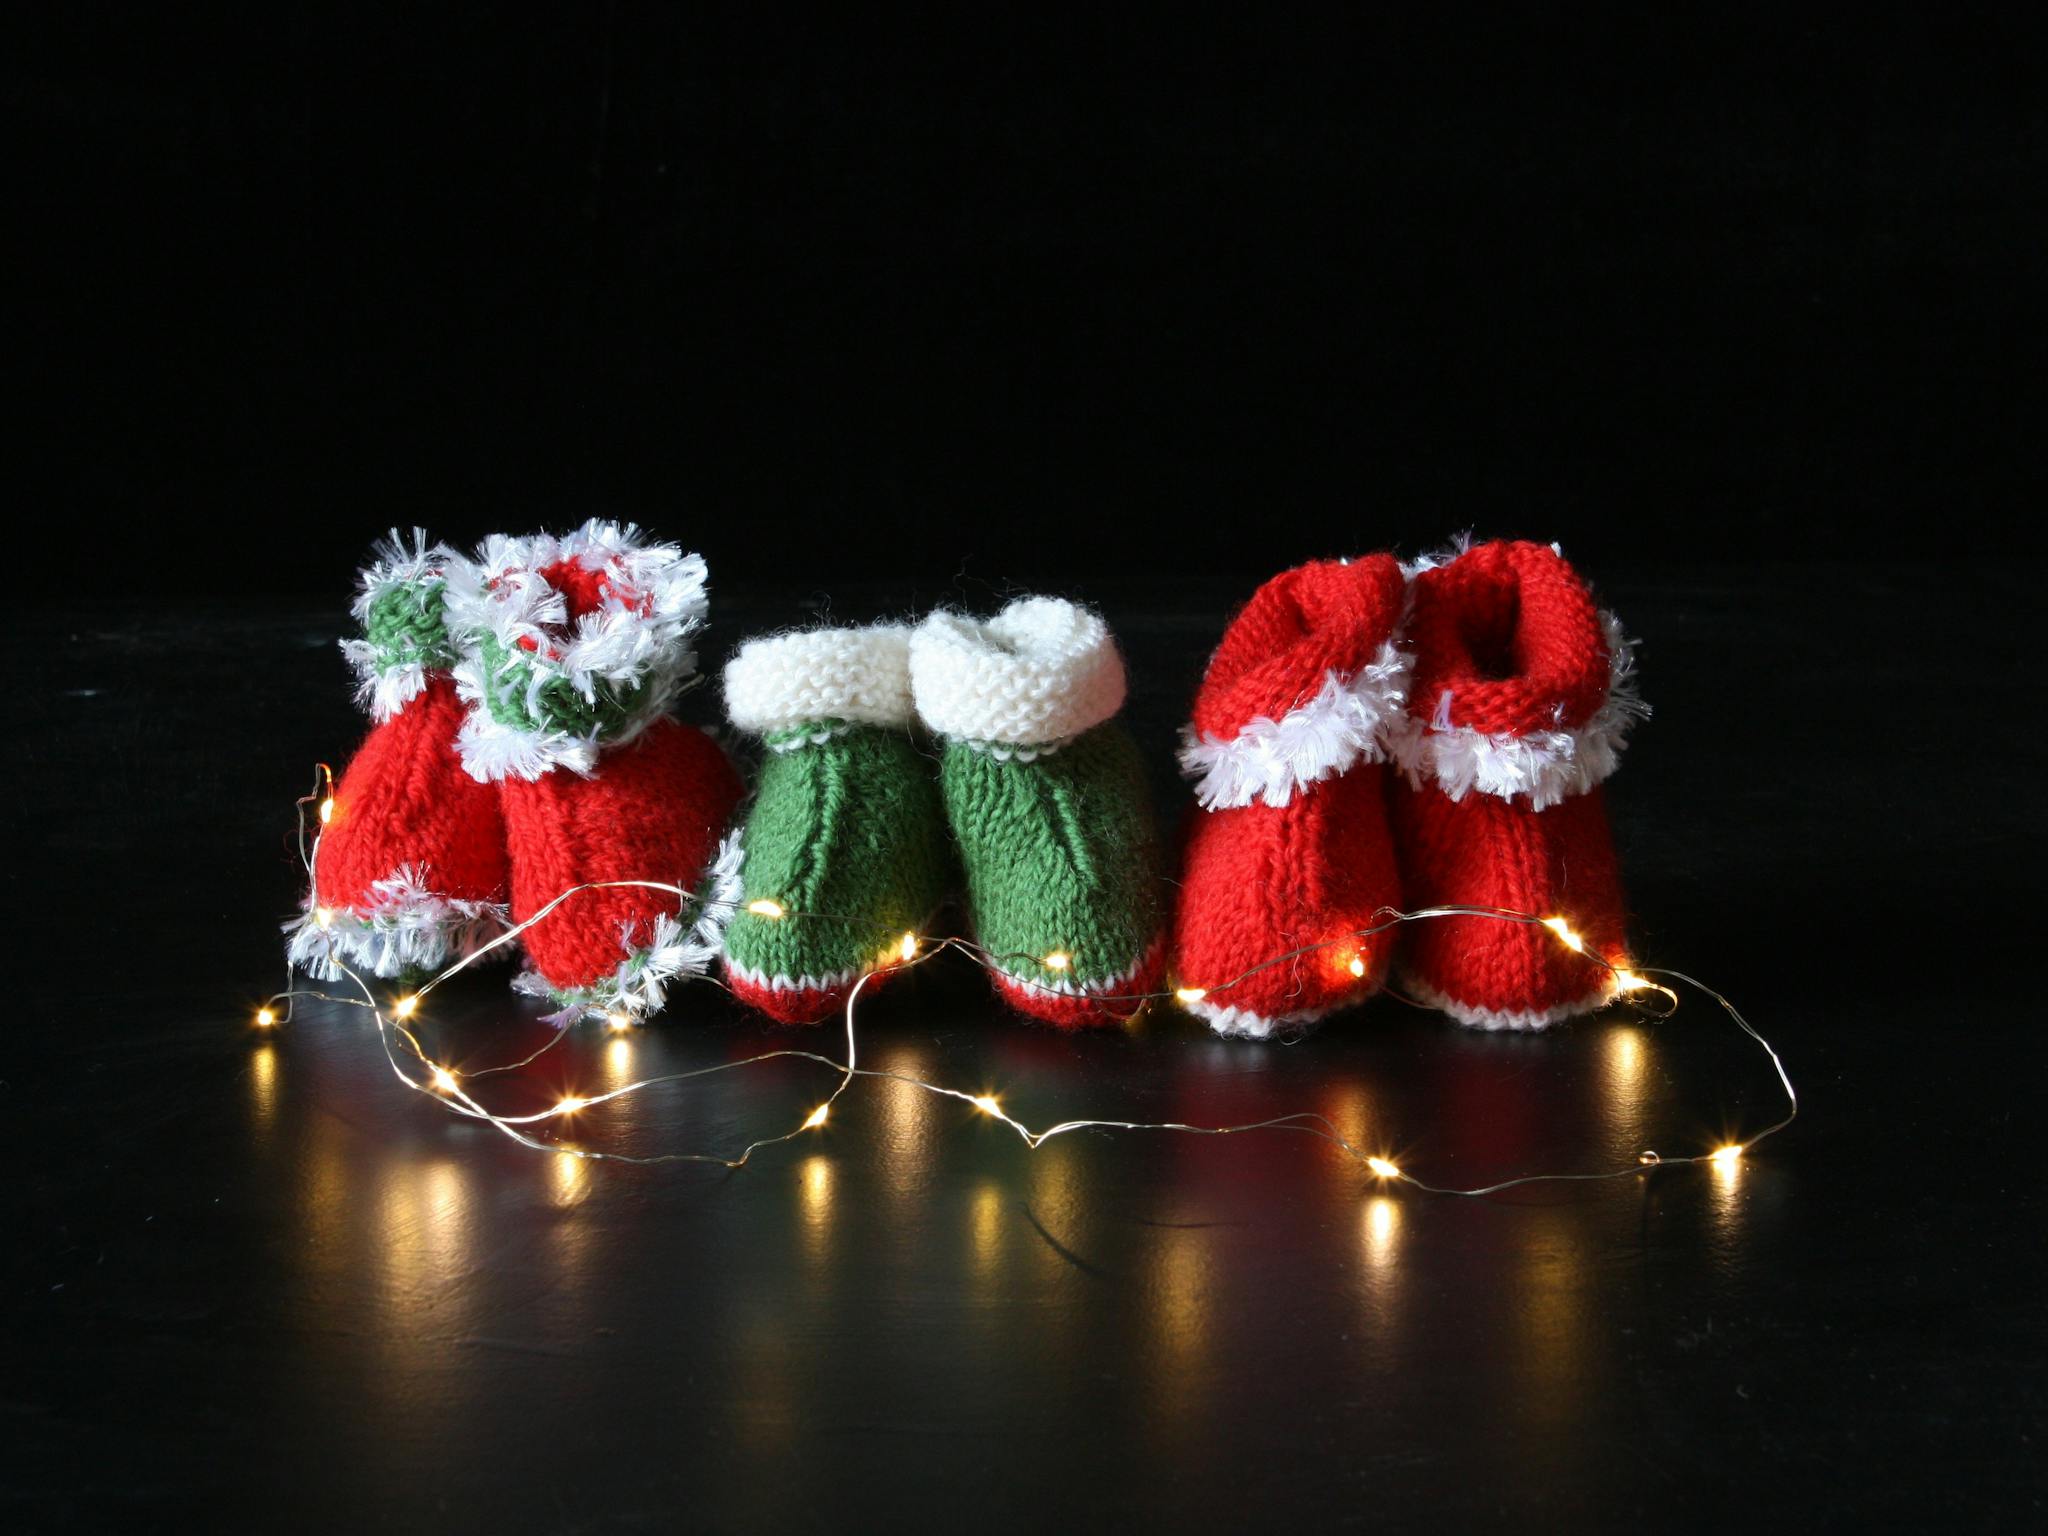 'Festive Feet' handcrafted knitwear by Mary Cummane.